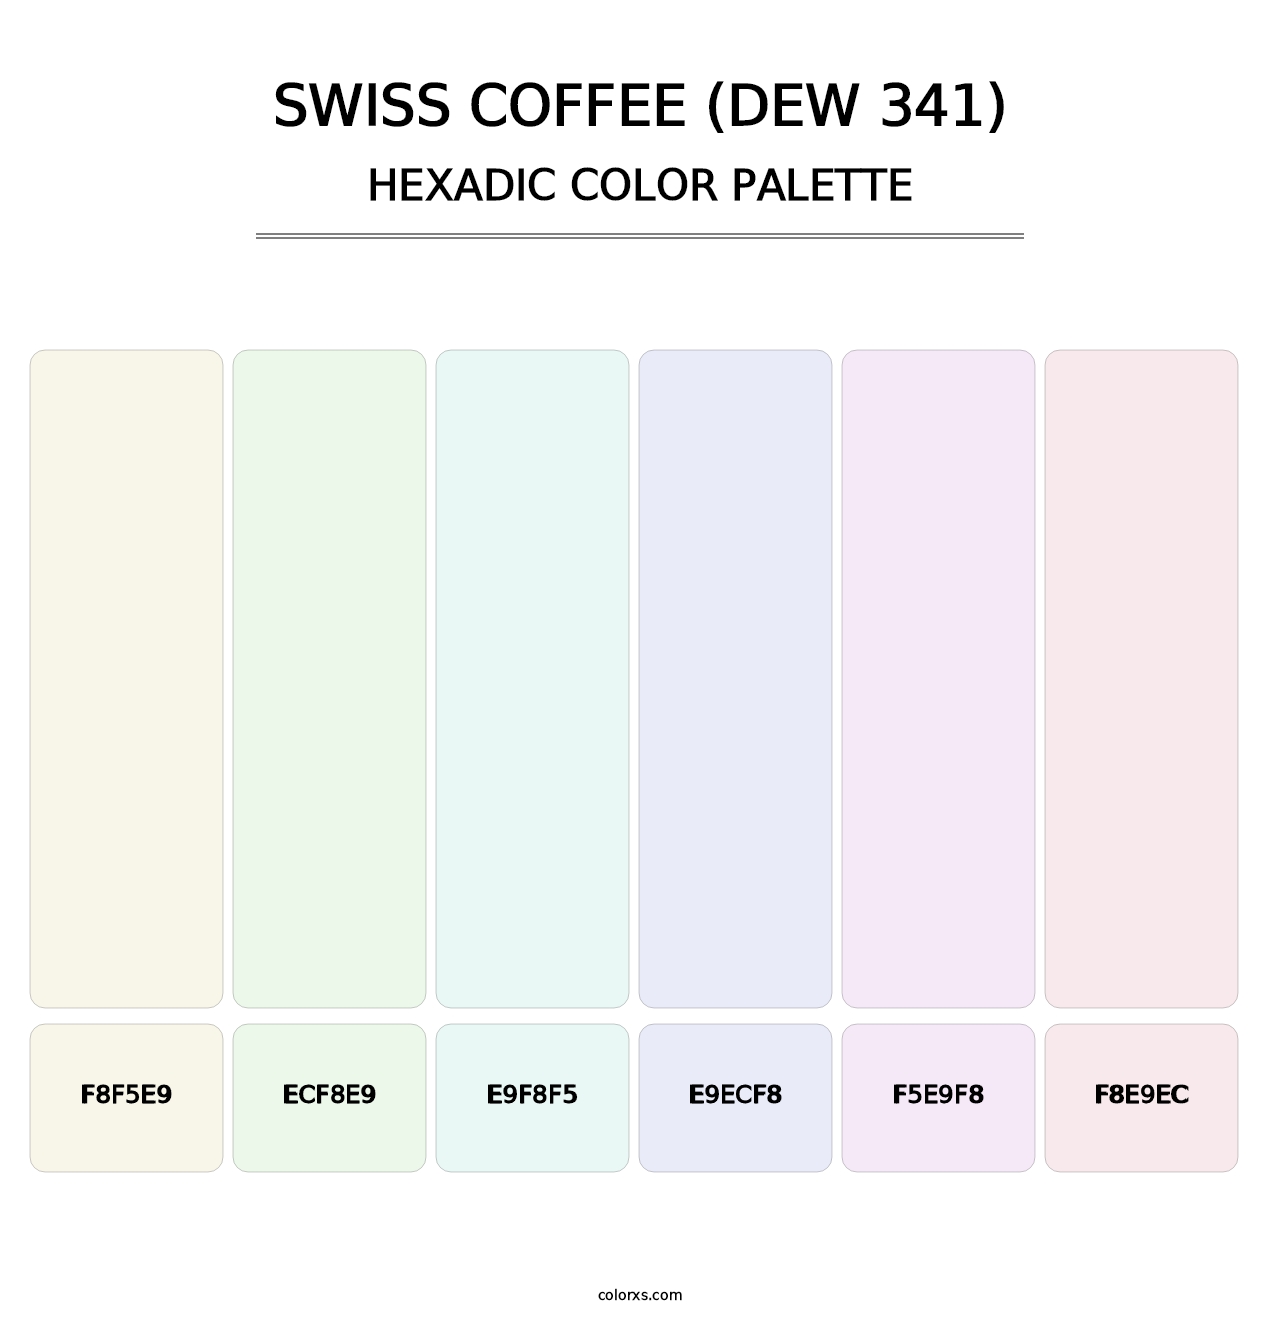 Swiss Coffee (DEW 341) - Hexadic Color Palette